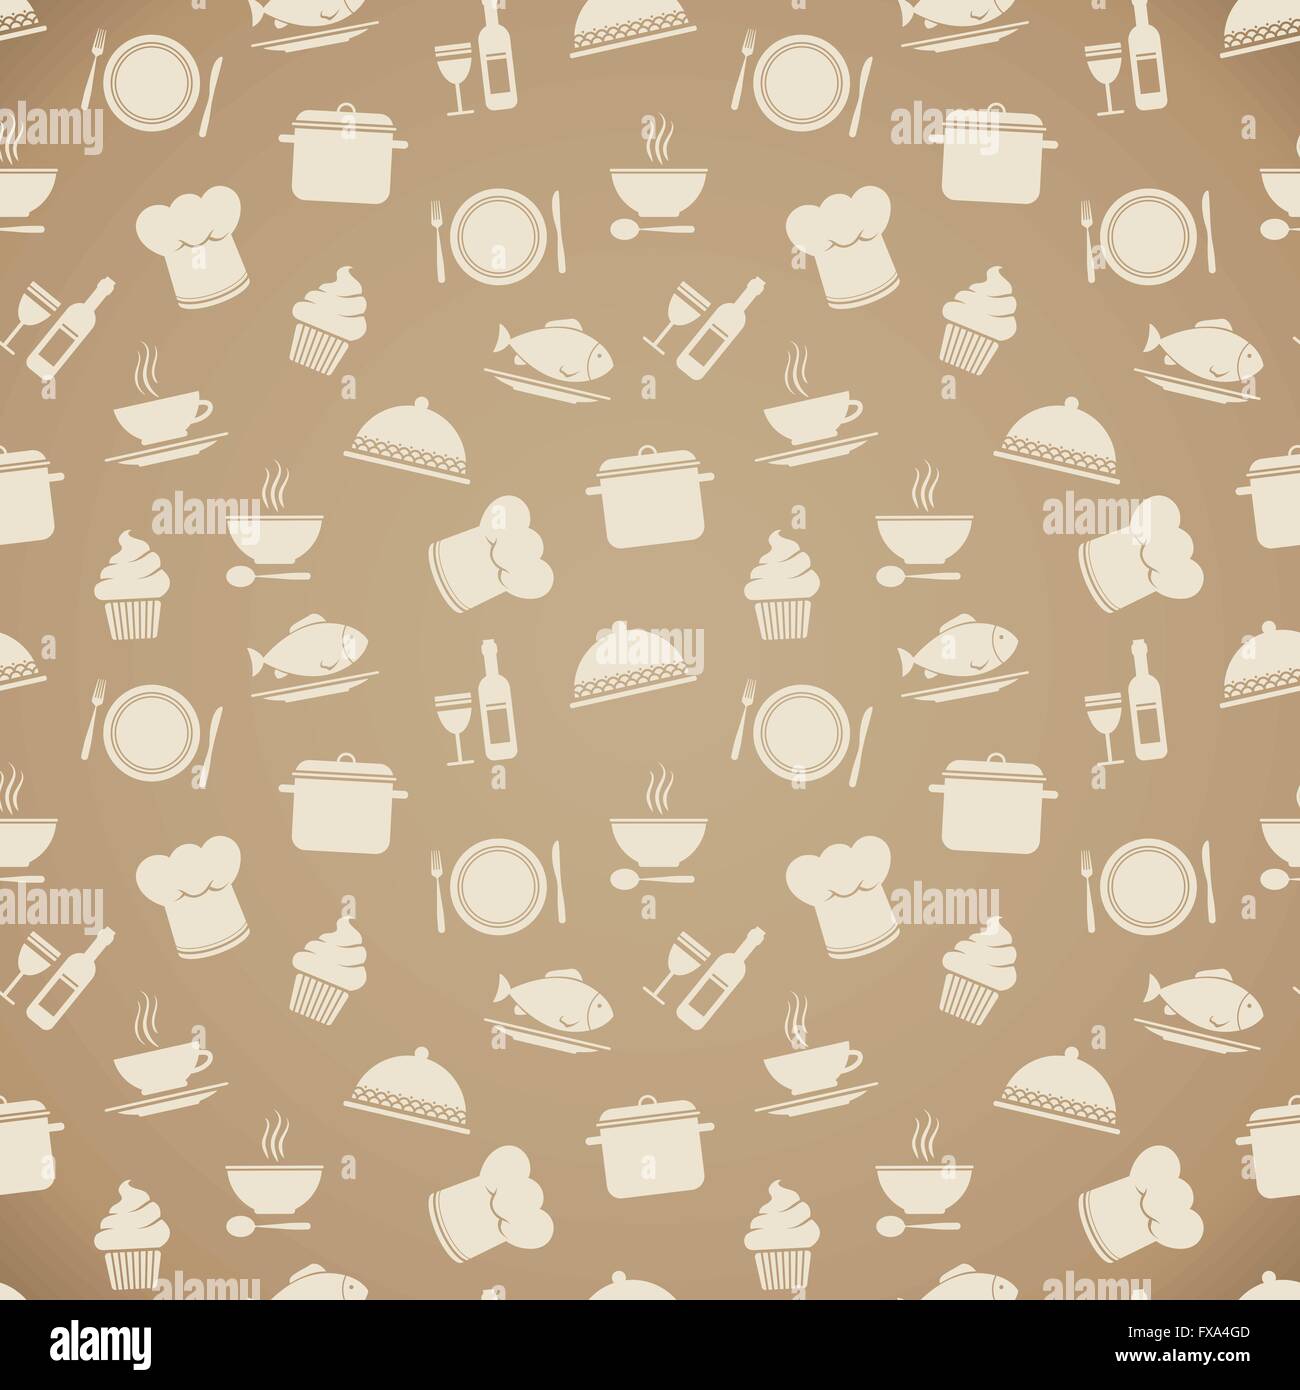 Seamless restaurant menu pattern background Stock Vector Image & Art ...